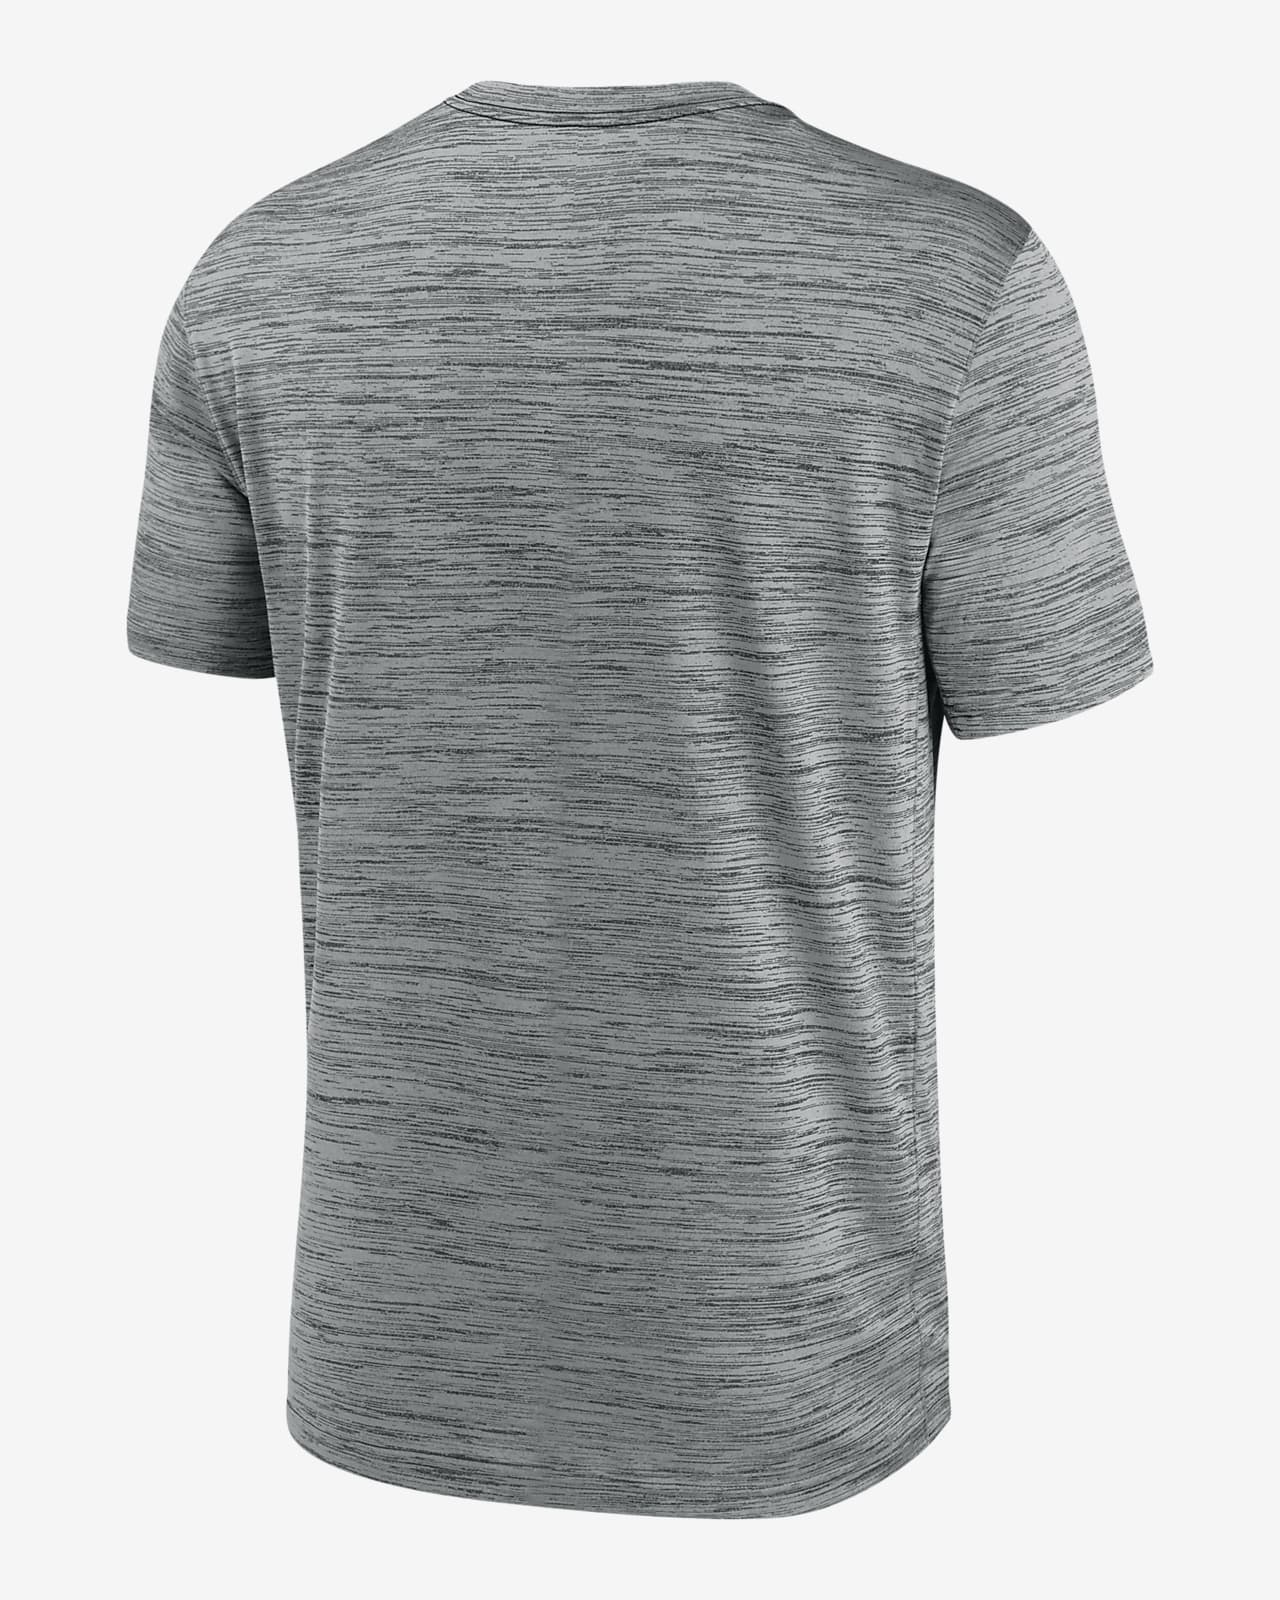 Nike Dri-FIT Velocity Practice (MLB San Francisco Giants) Men's T-Shirt.